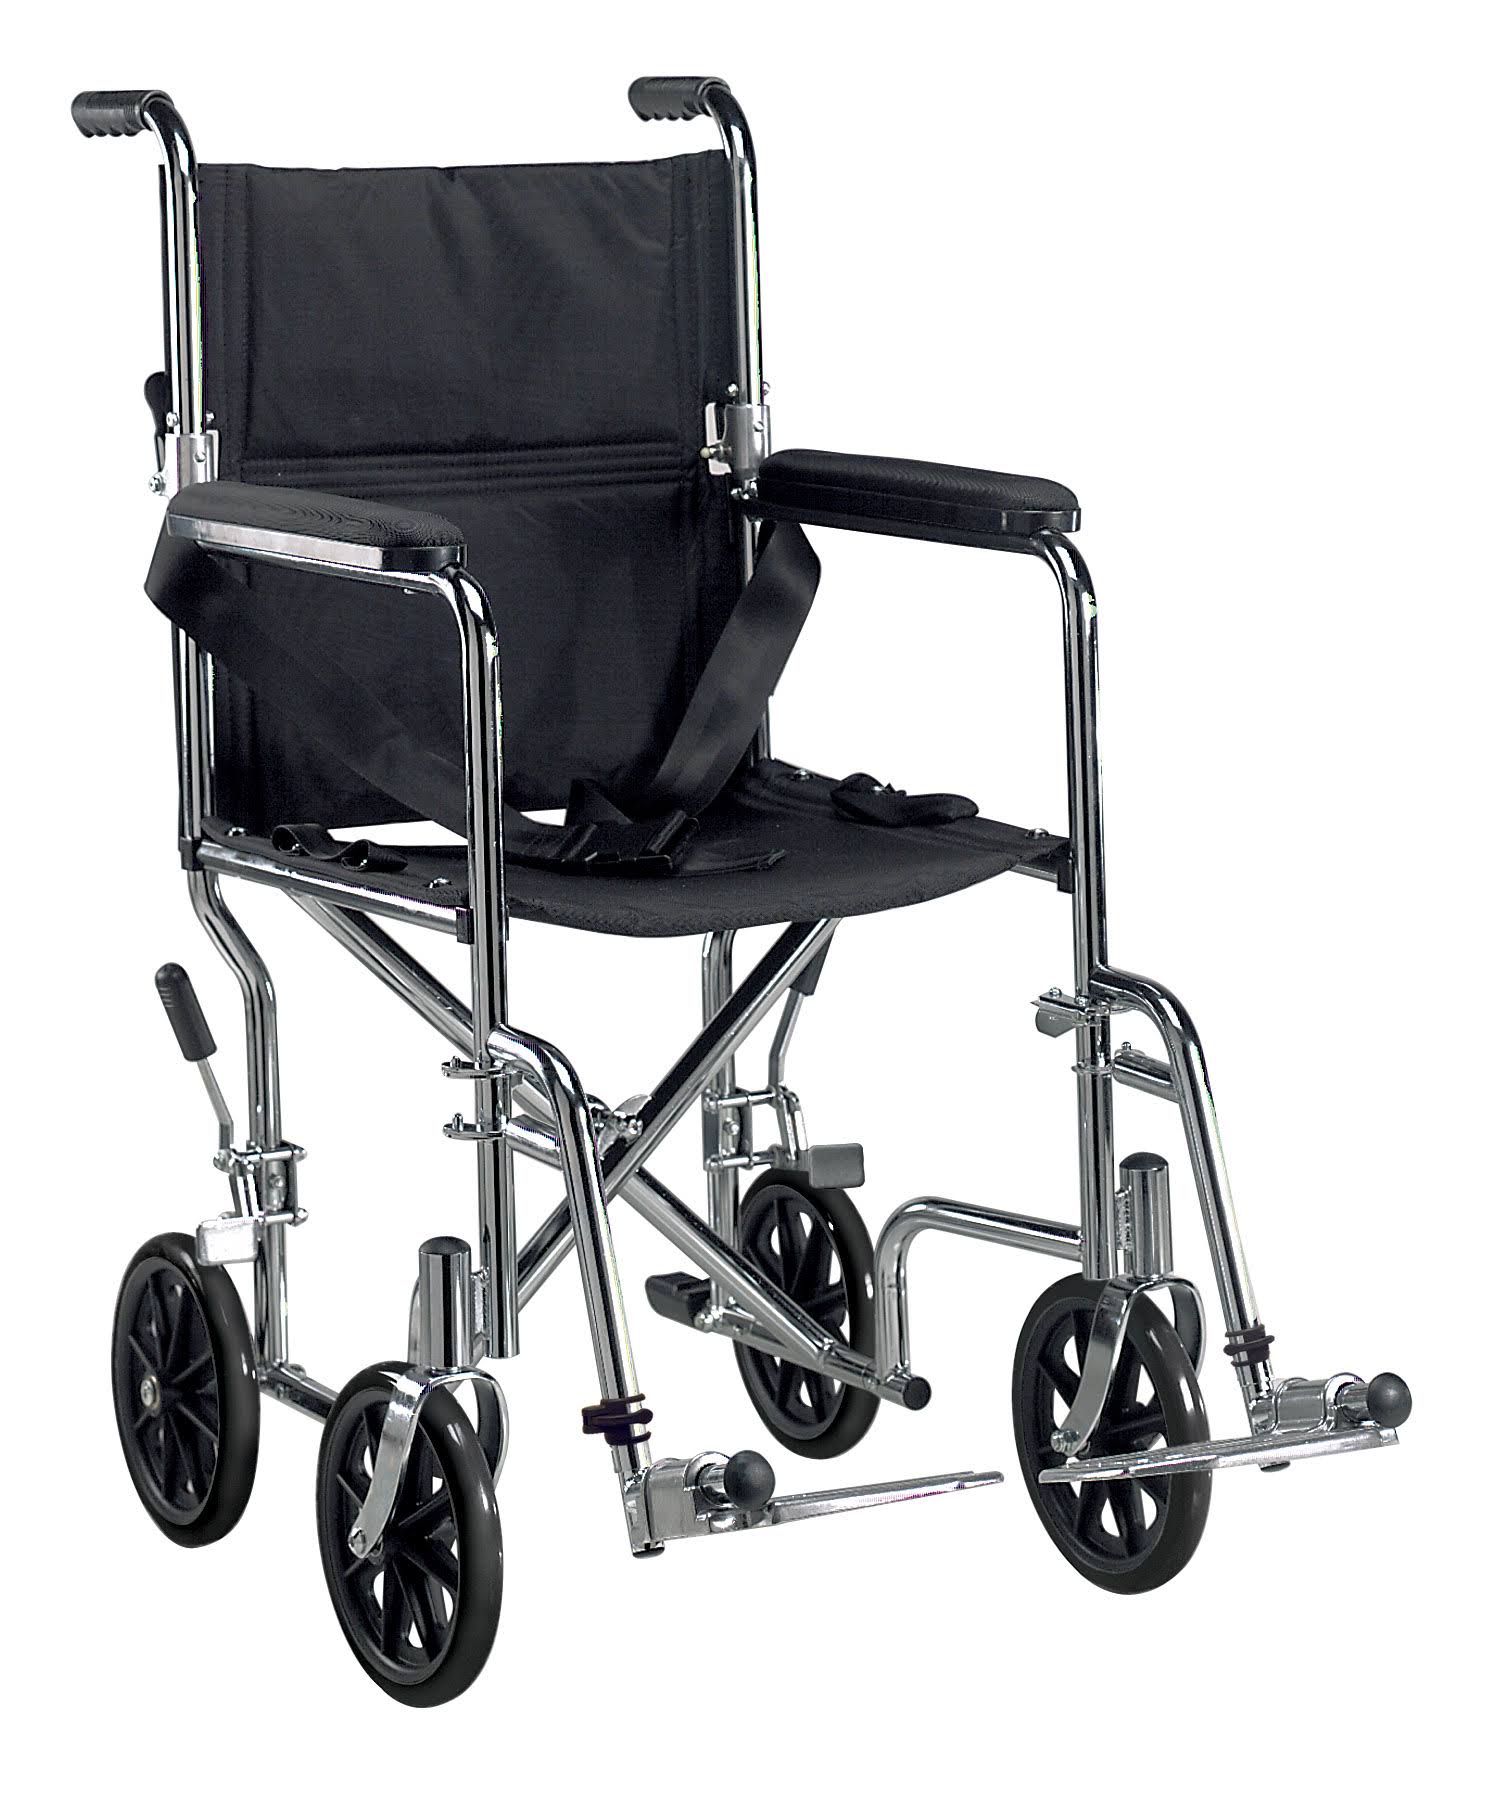 Drive Medical كرسي متحرك Go Cart خفيف الوزن للنقل مقاس 19 قدمًا